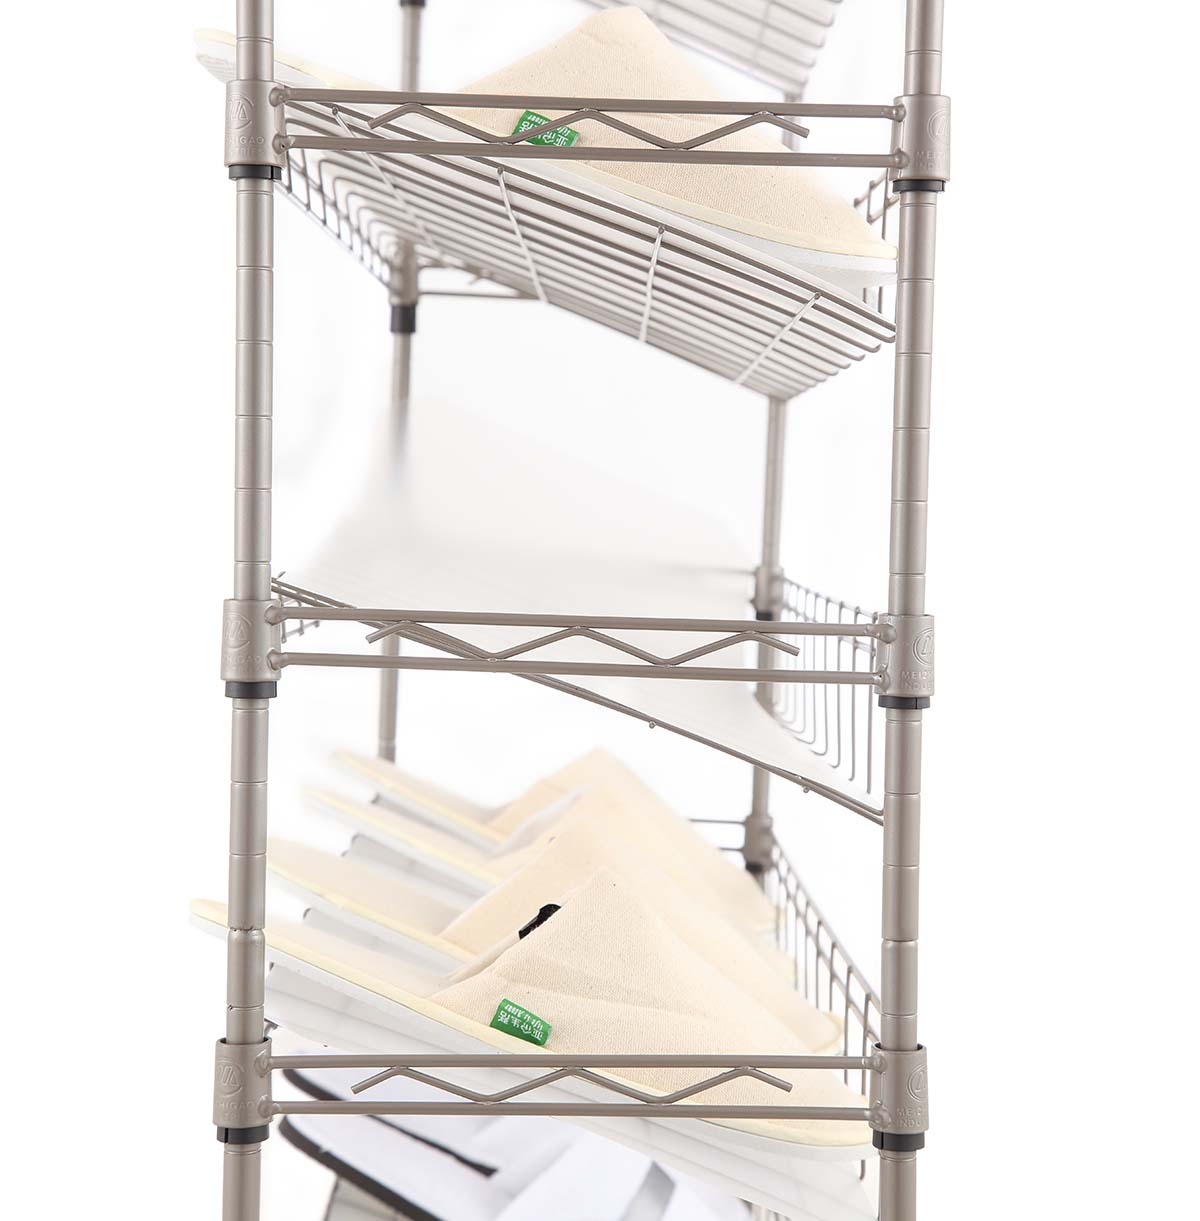 5 shelf wire storage rack manufacture